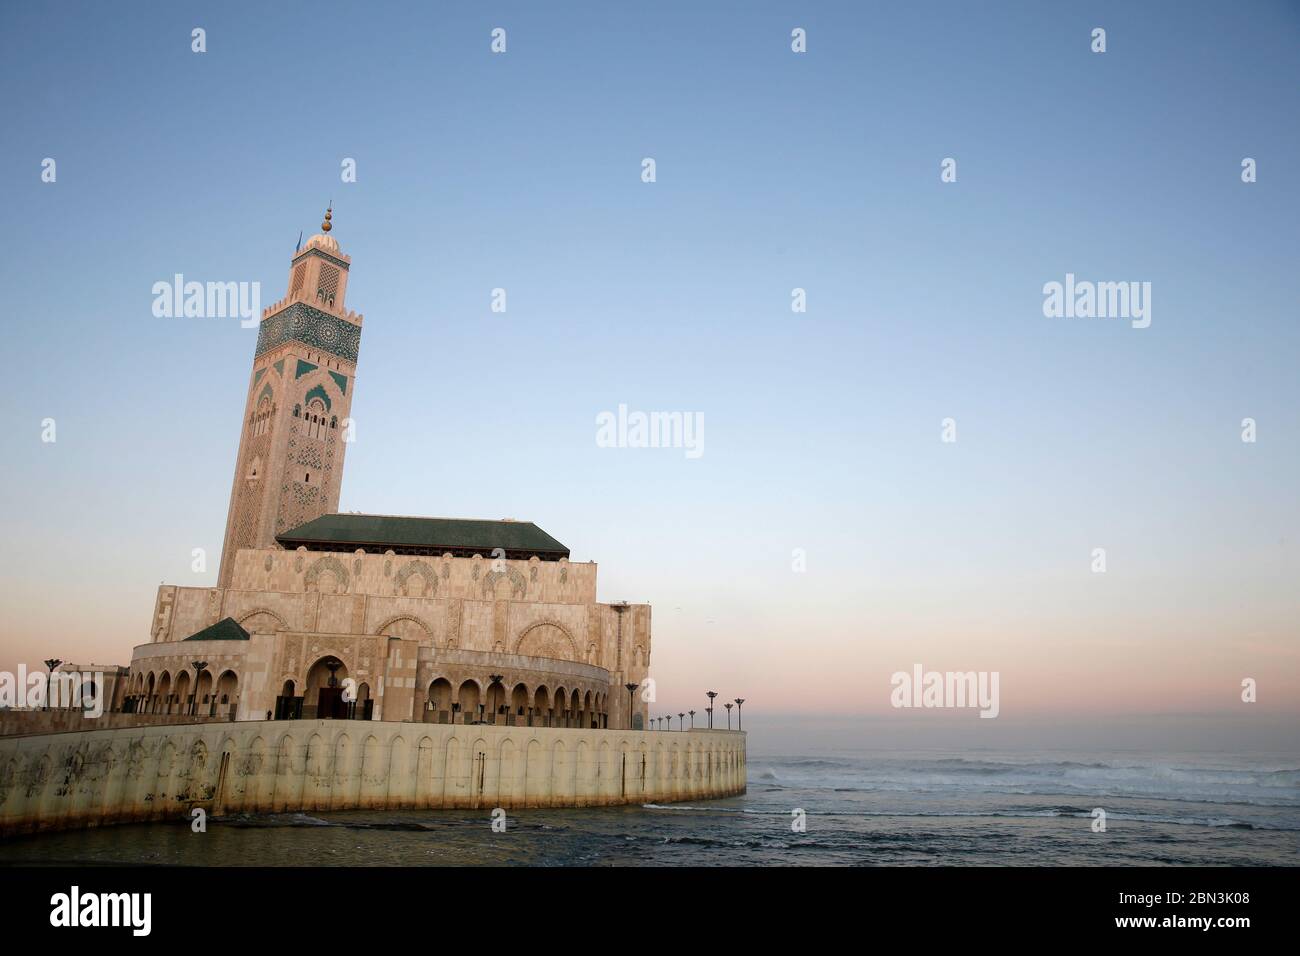 Mosquée Hassan II à l'aube, Casablanca, Maroc. Banque D'Images